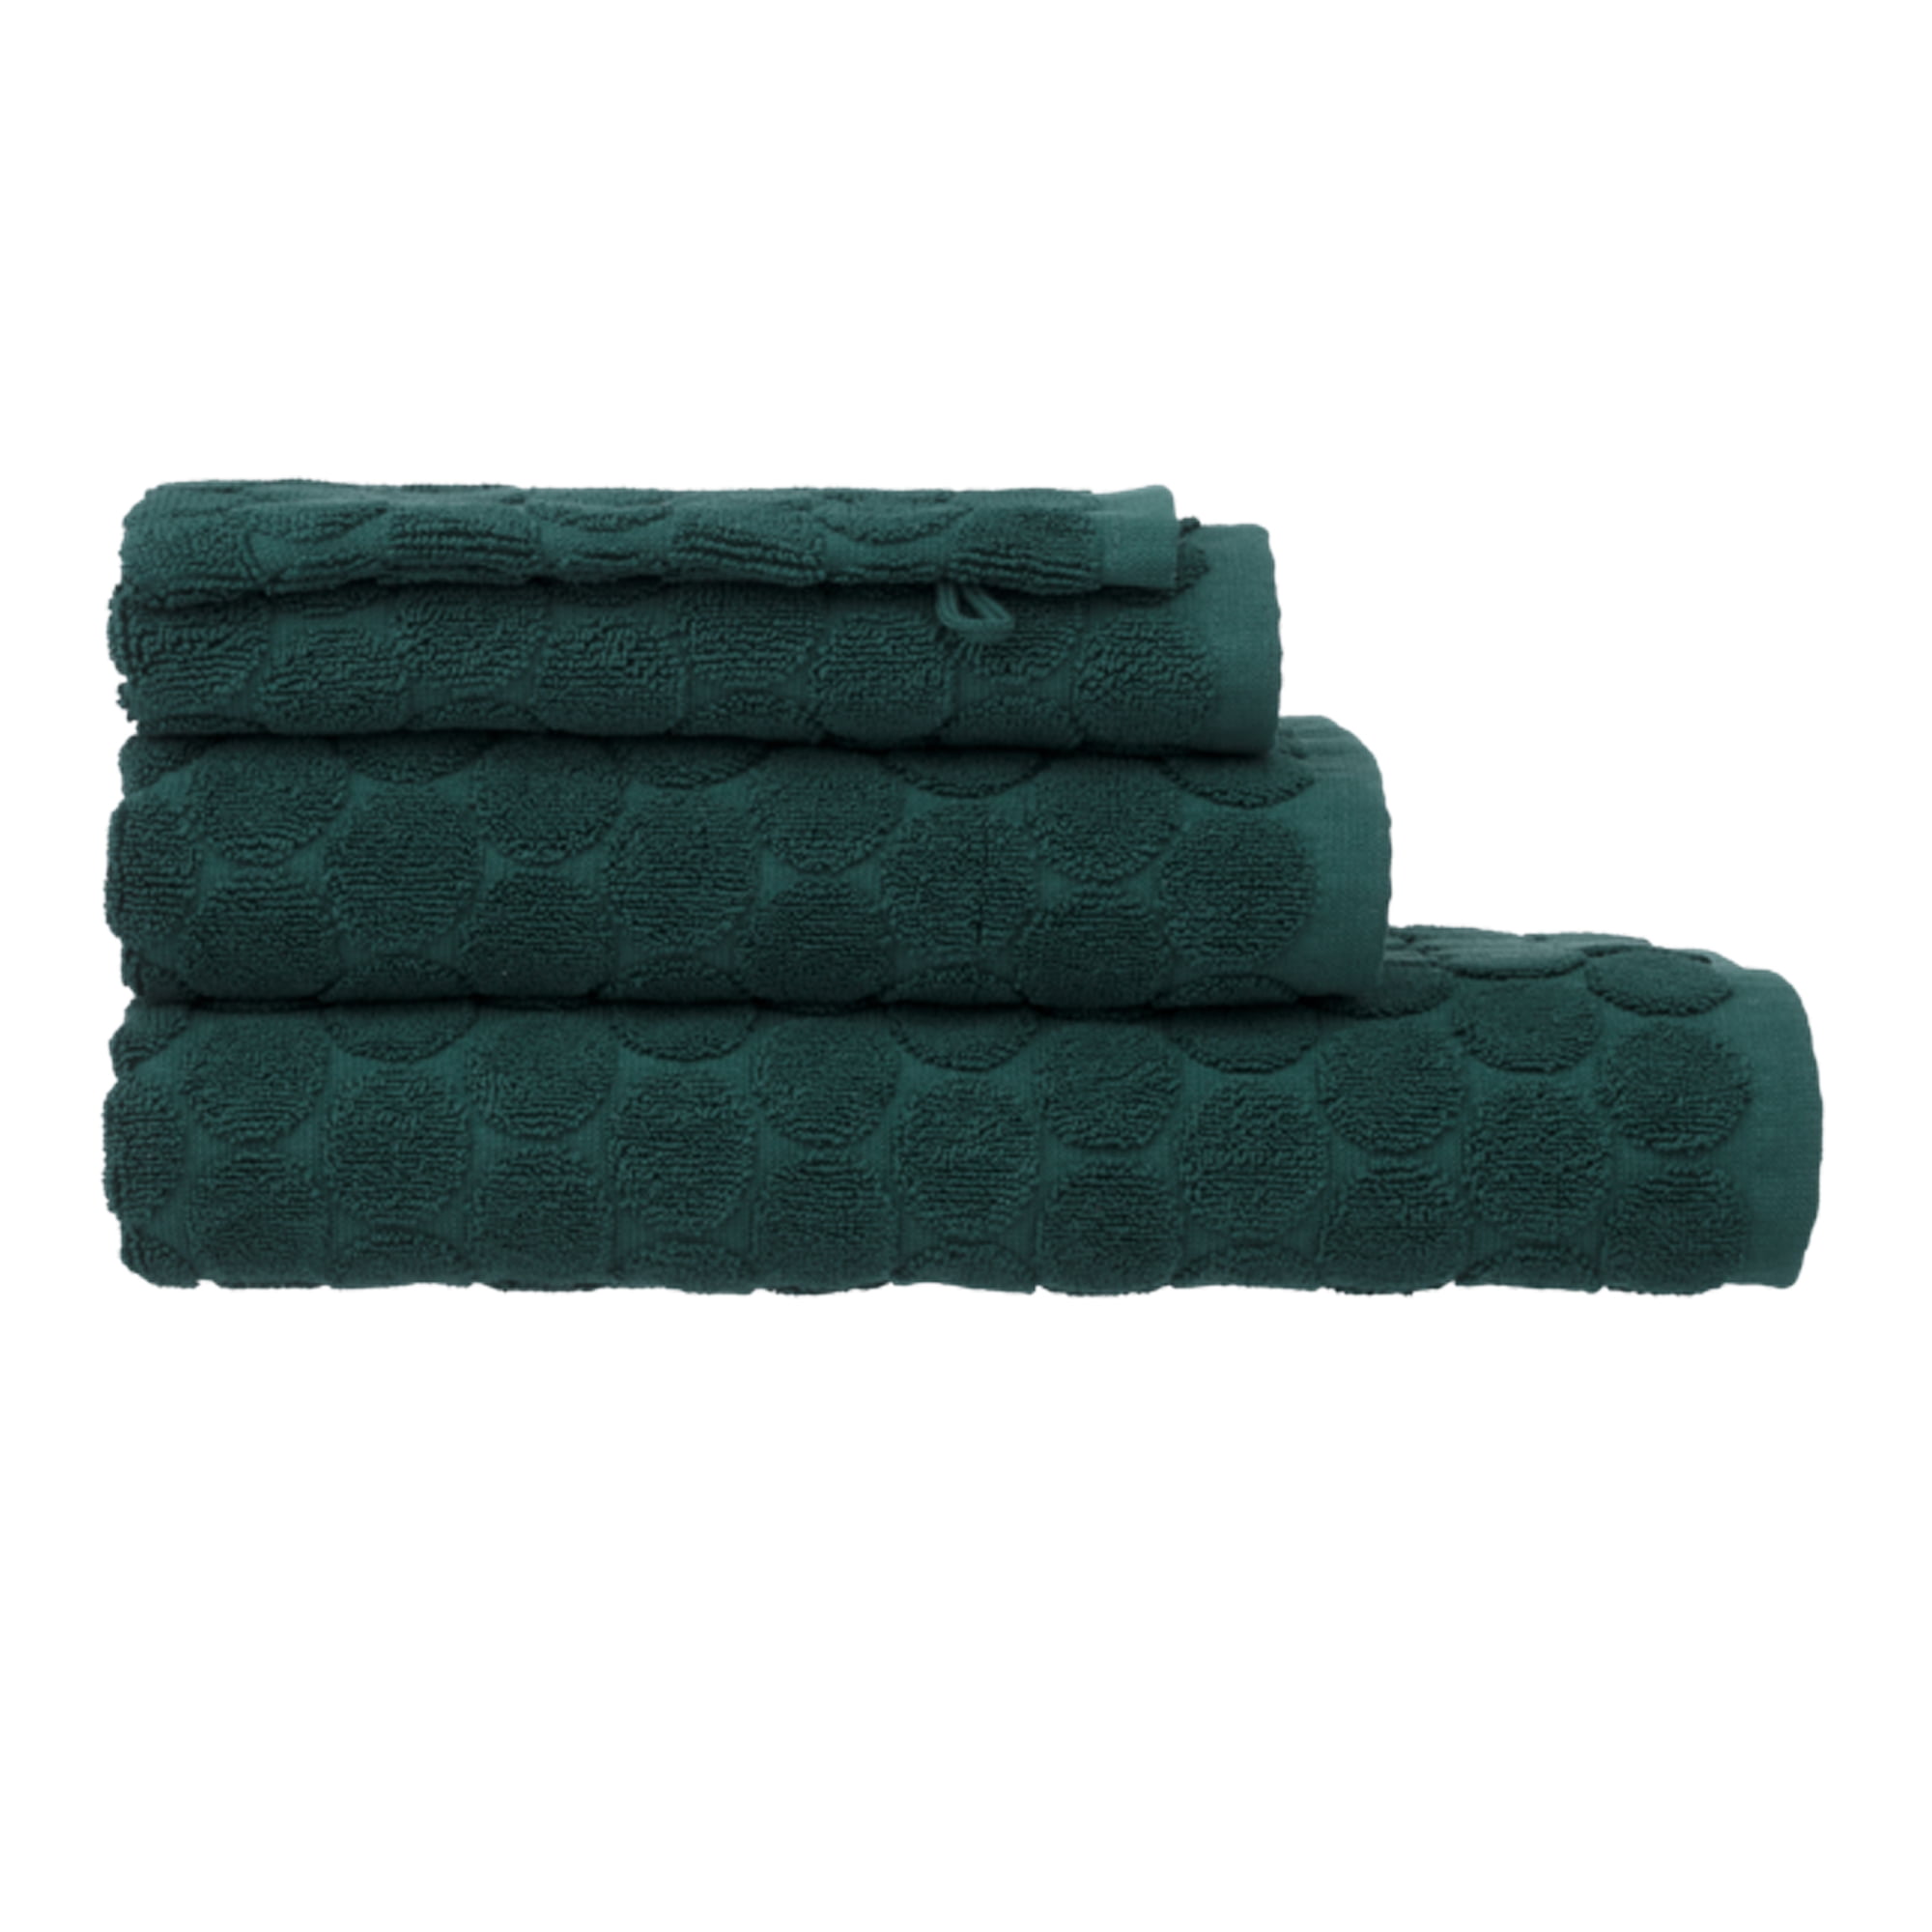 dark forest green bath towels